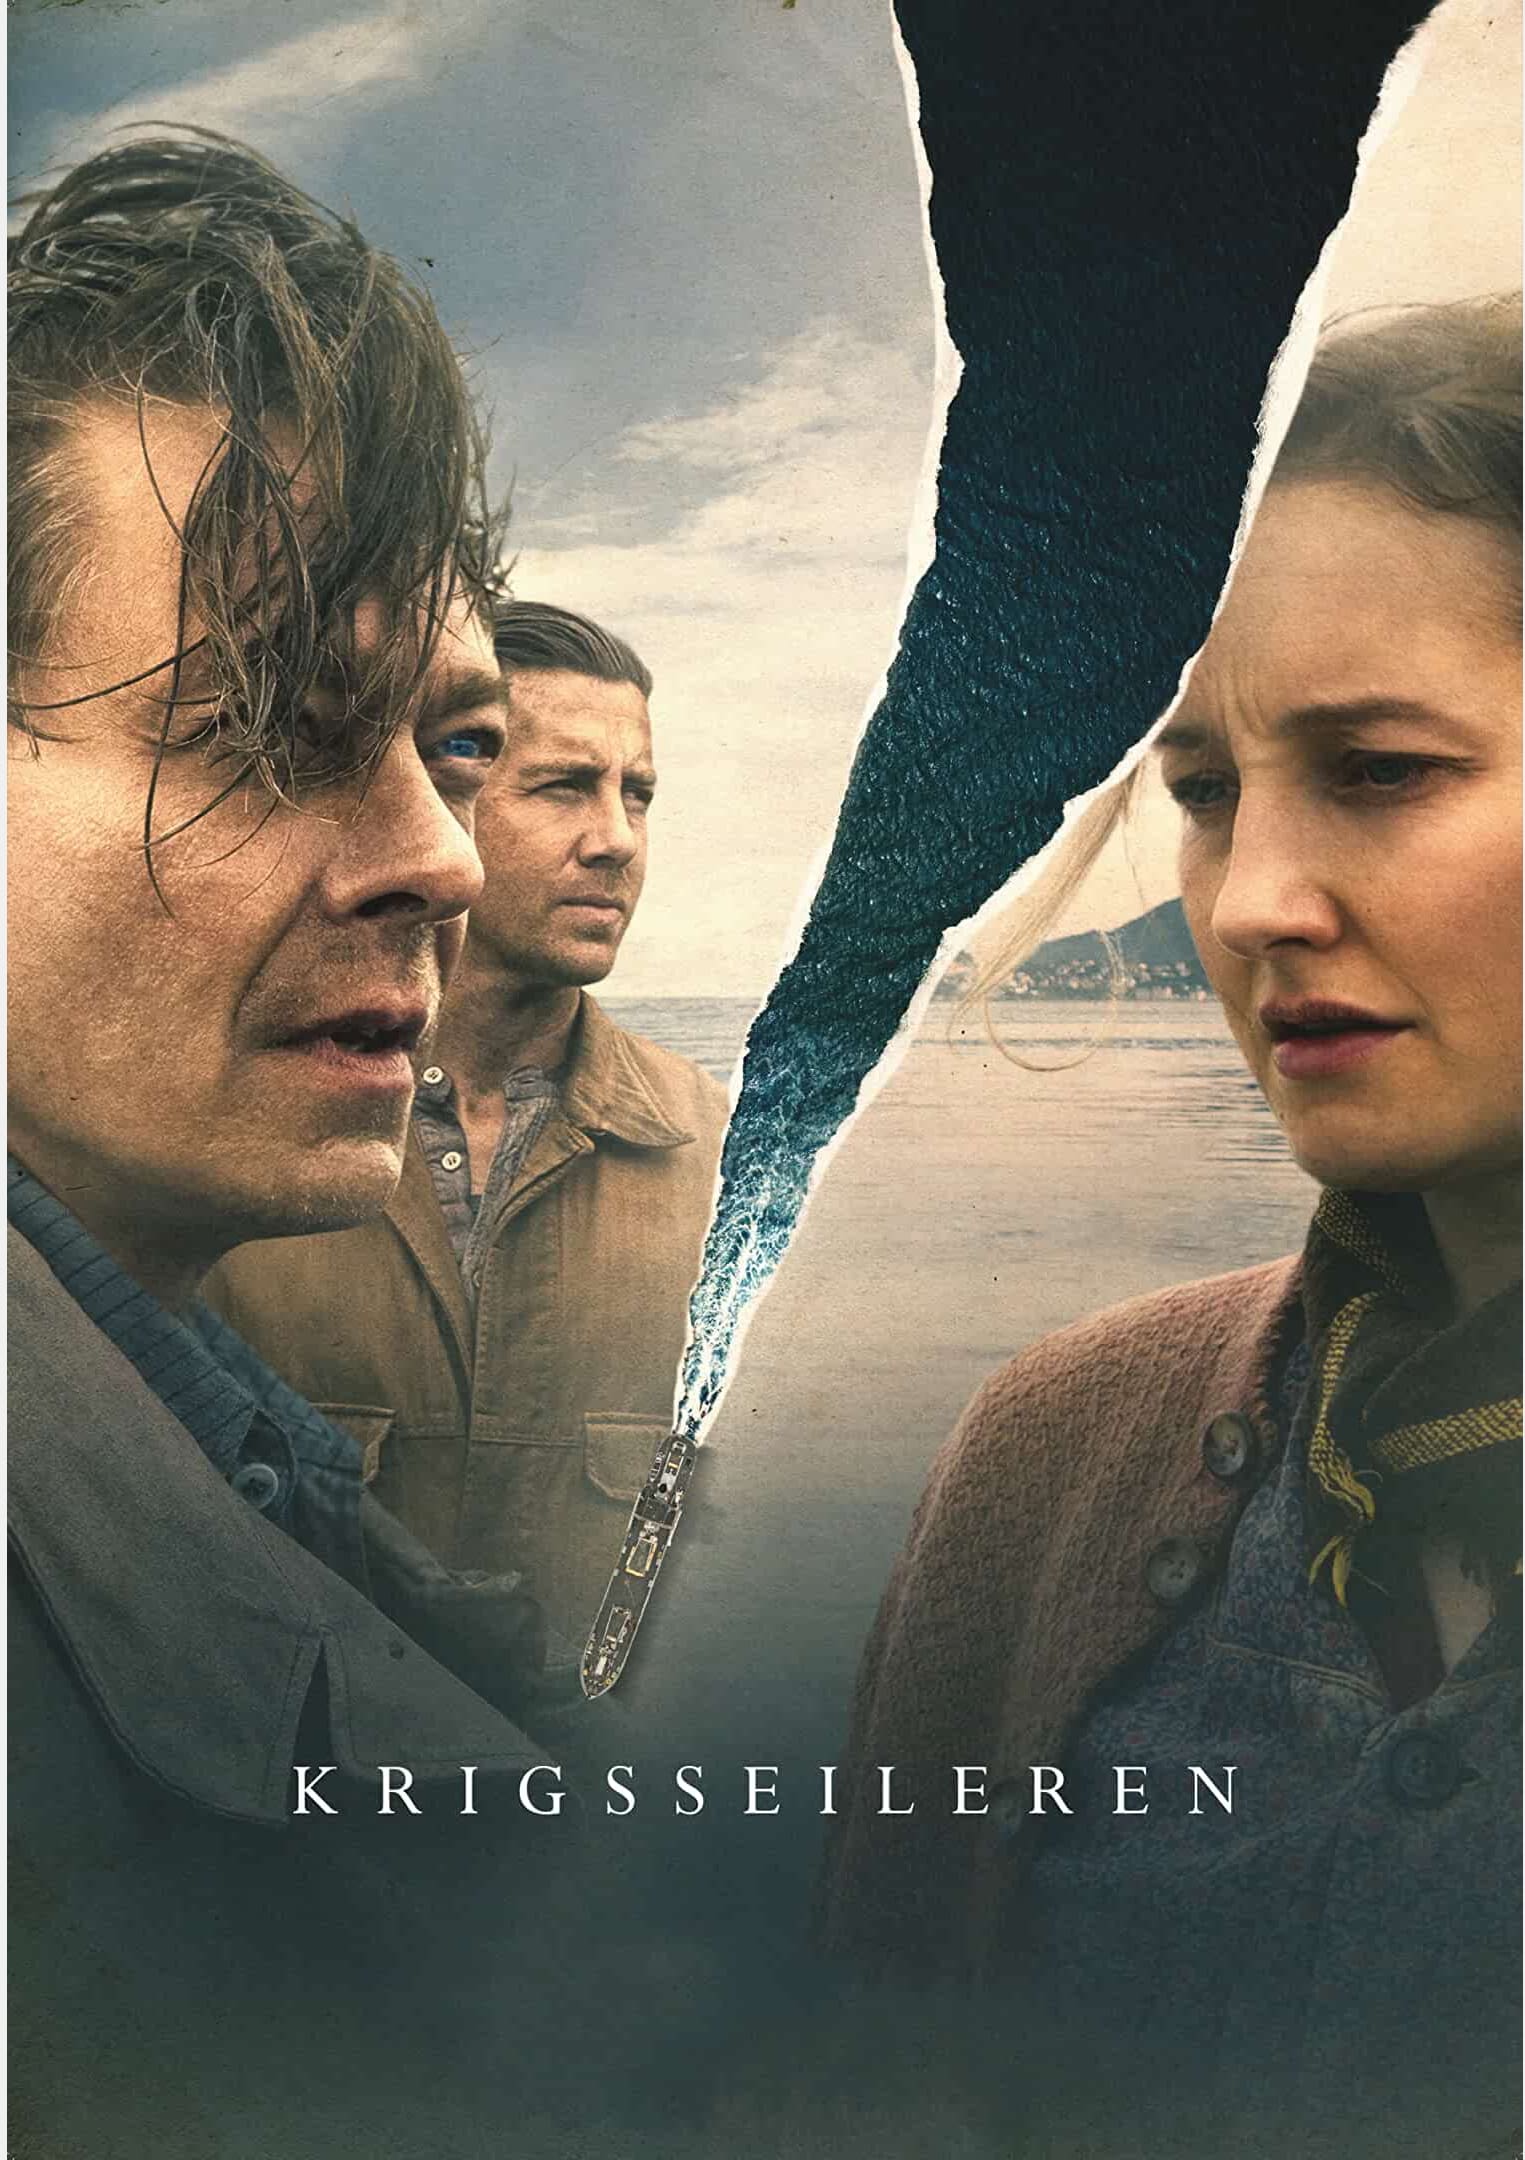 TV ratings for War Sailor (Krigsseileren) in Germany. Netflix TV series